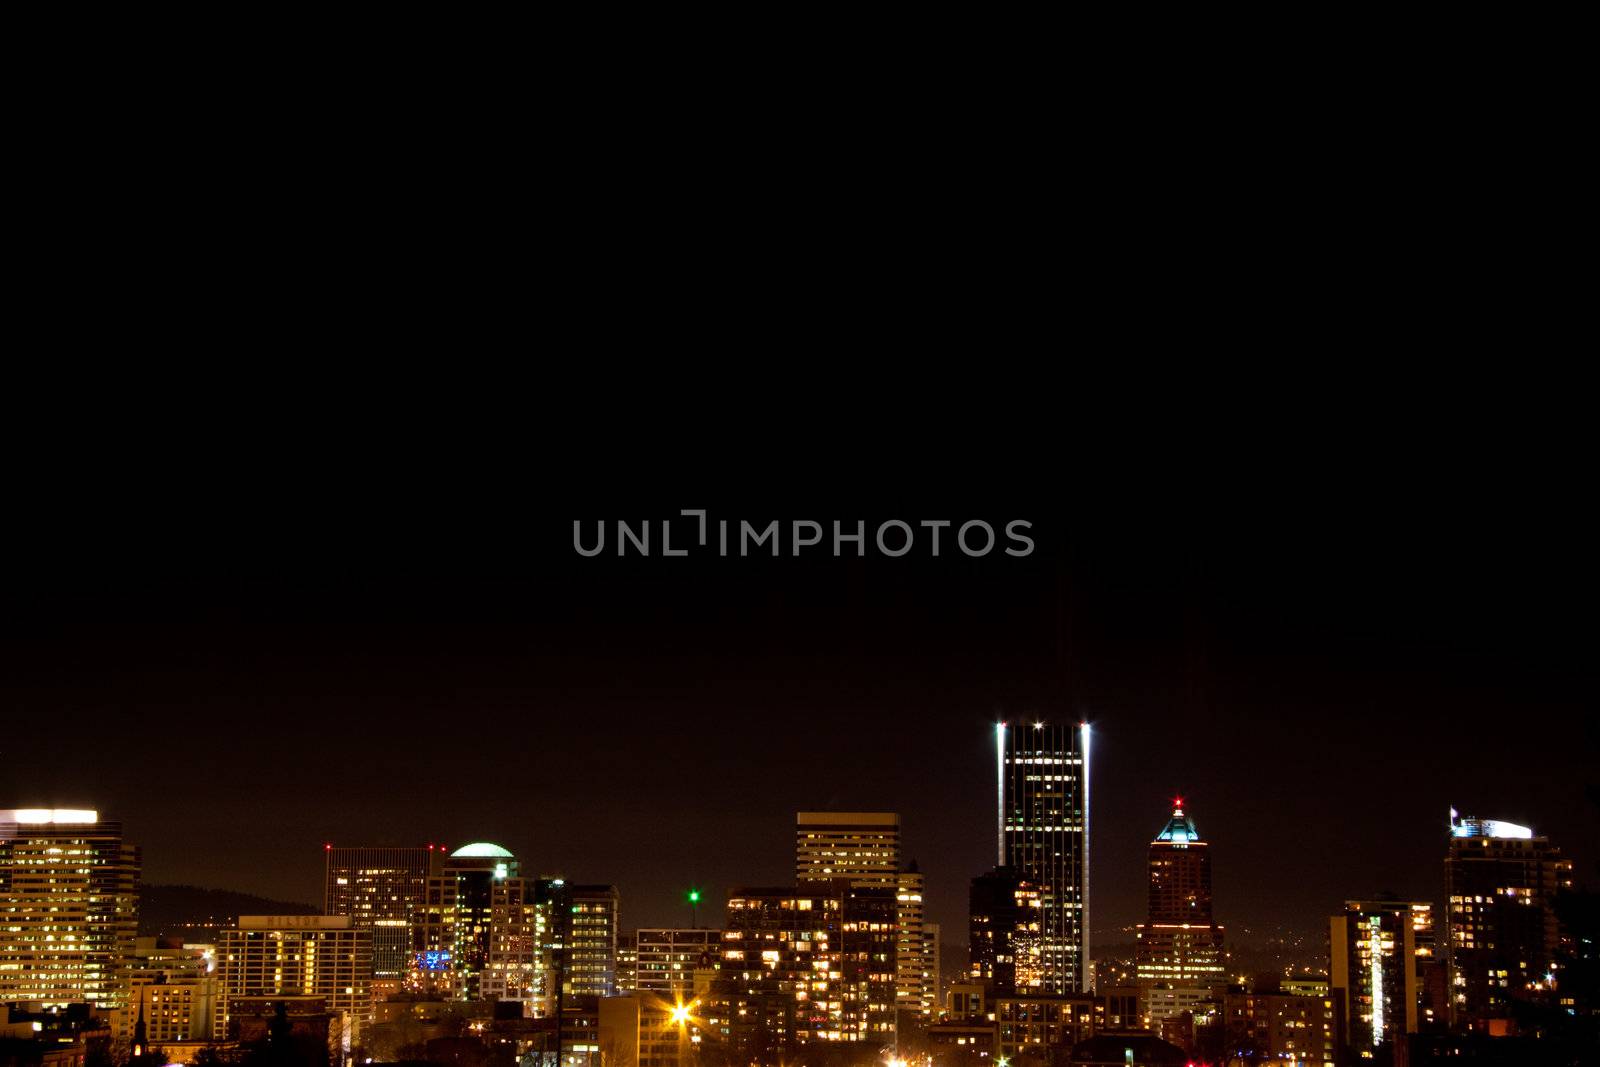 Portland, OR Night by joshuaraineyphotography